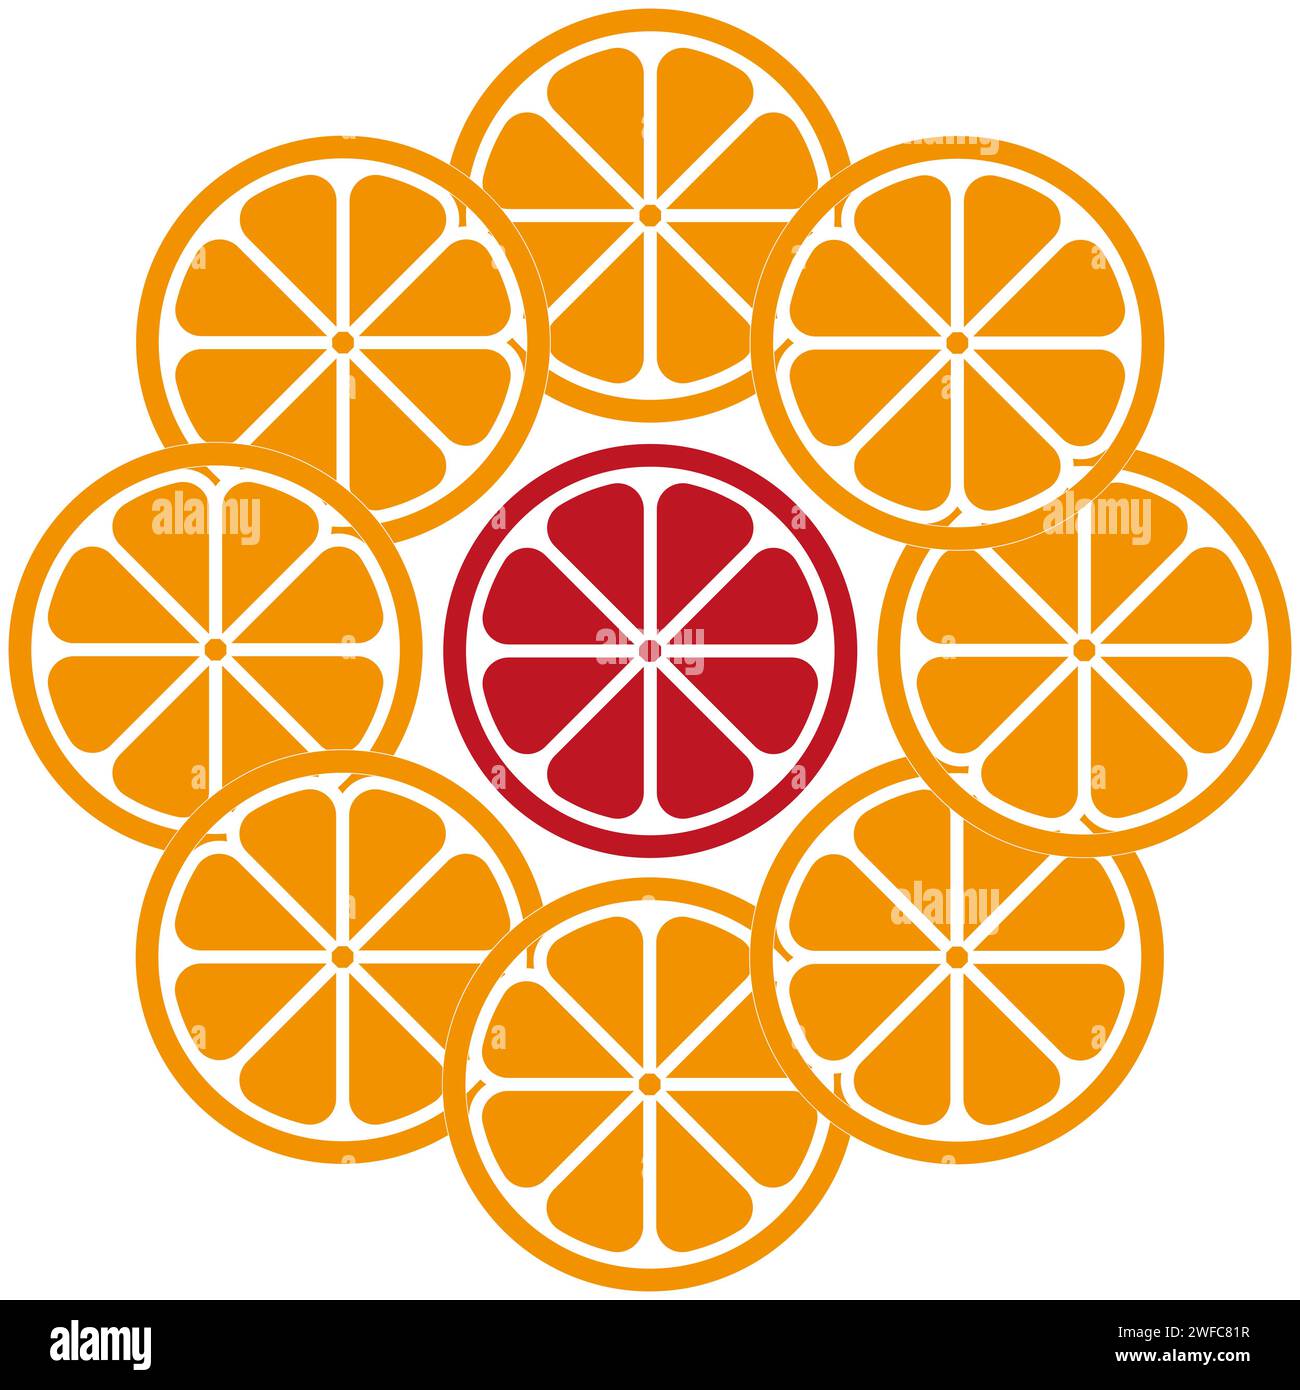 Sketch cut orange icon. Summer concept. Creative concept. Sweet food. Vector illustration. Stock image. EPS 10. Stock Vector